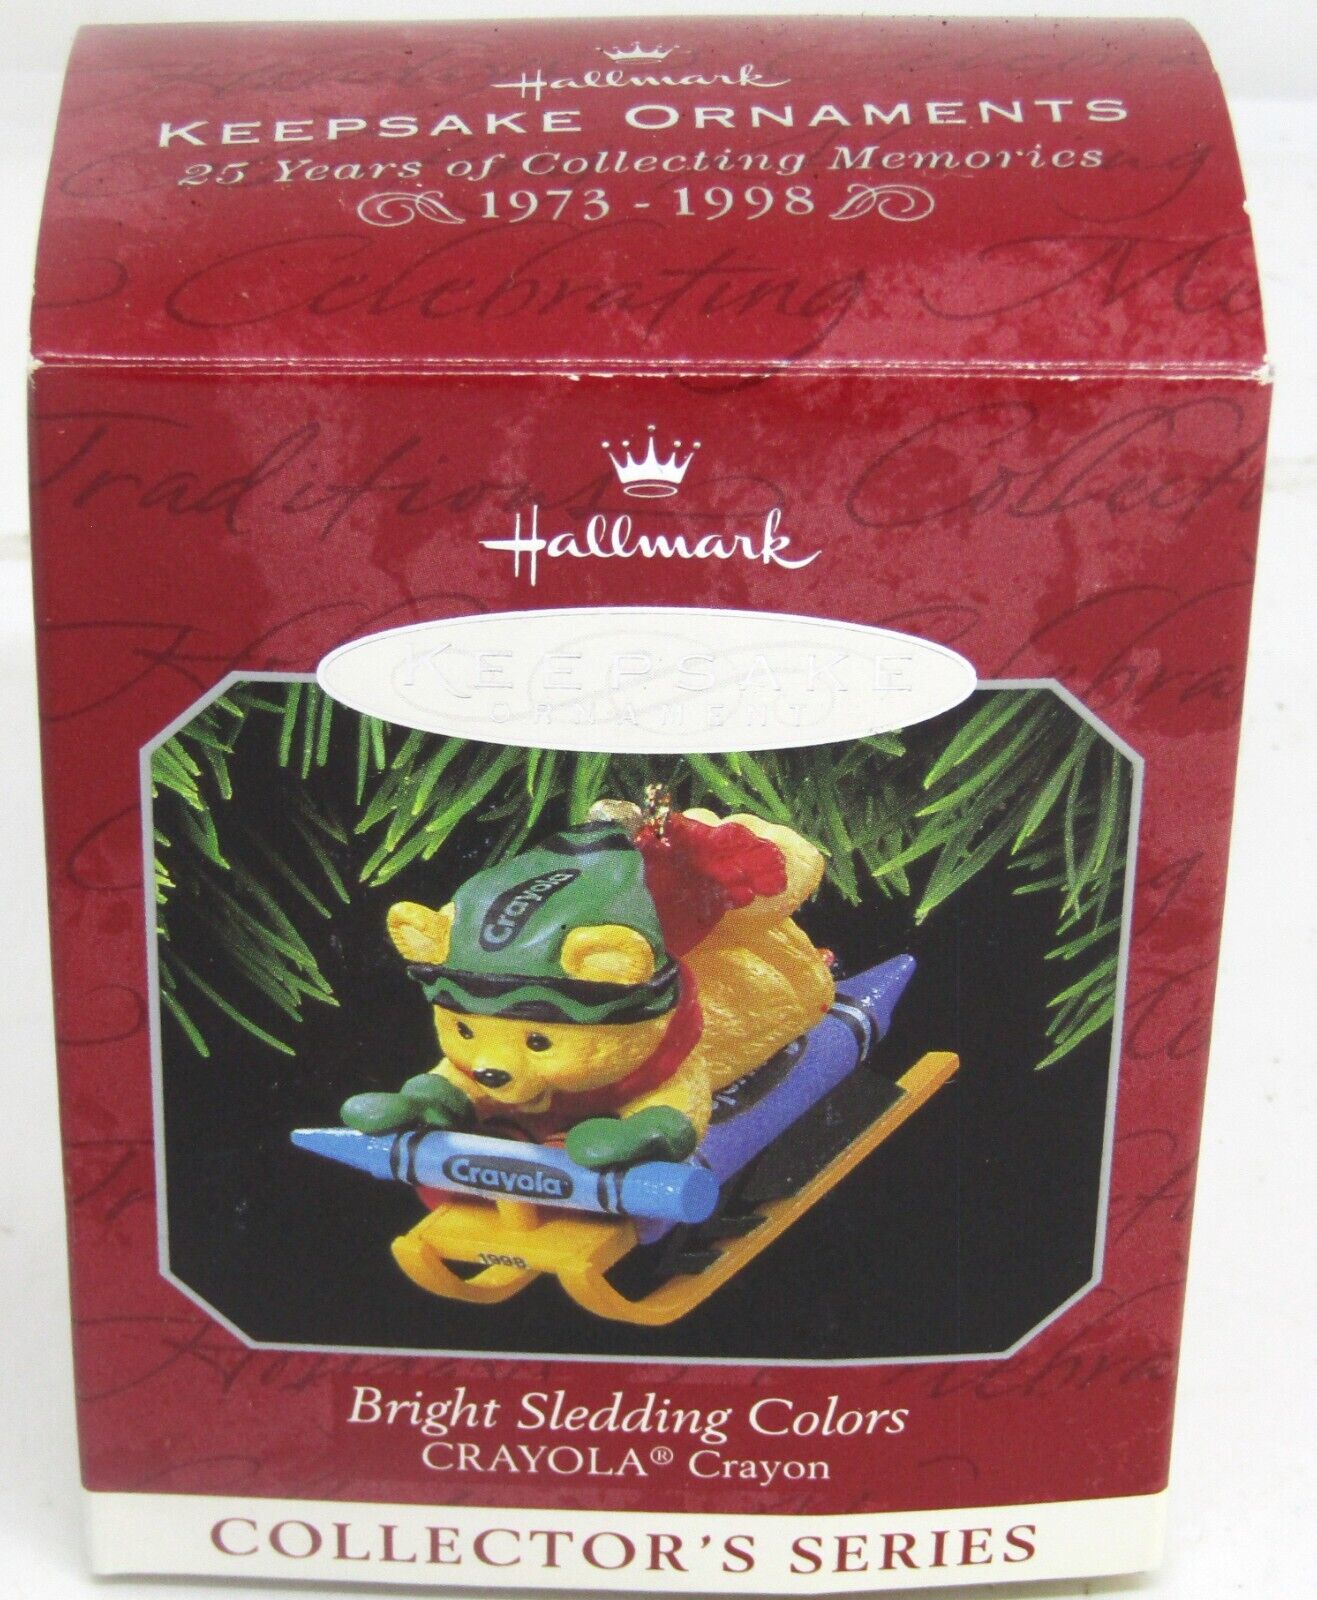 Vintage 1998, Hallmark Keepsake, Collector's Series, Bright Sledding Colors, Orn